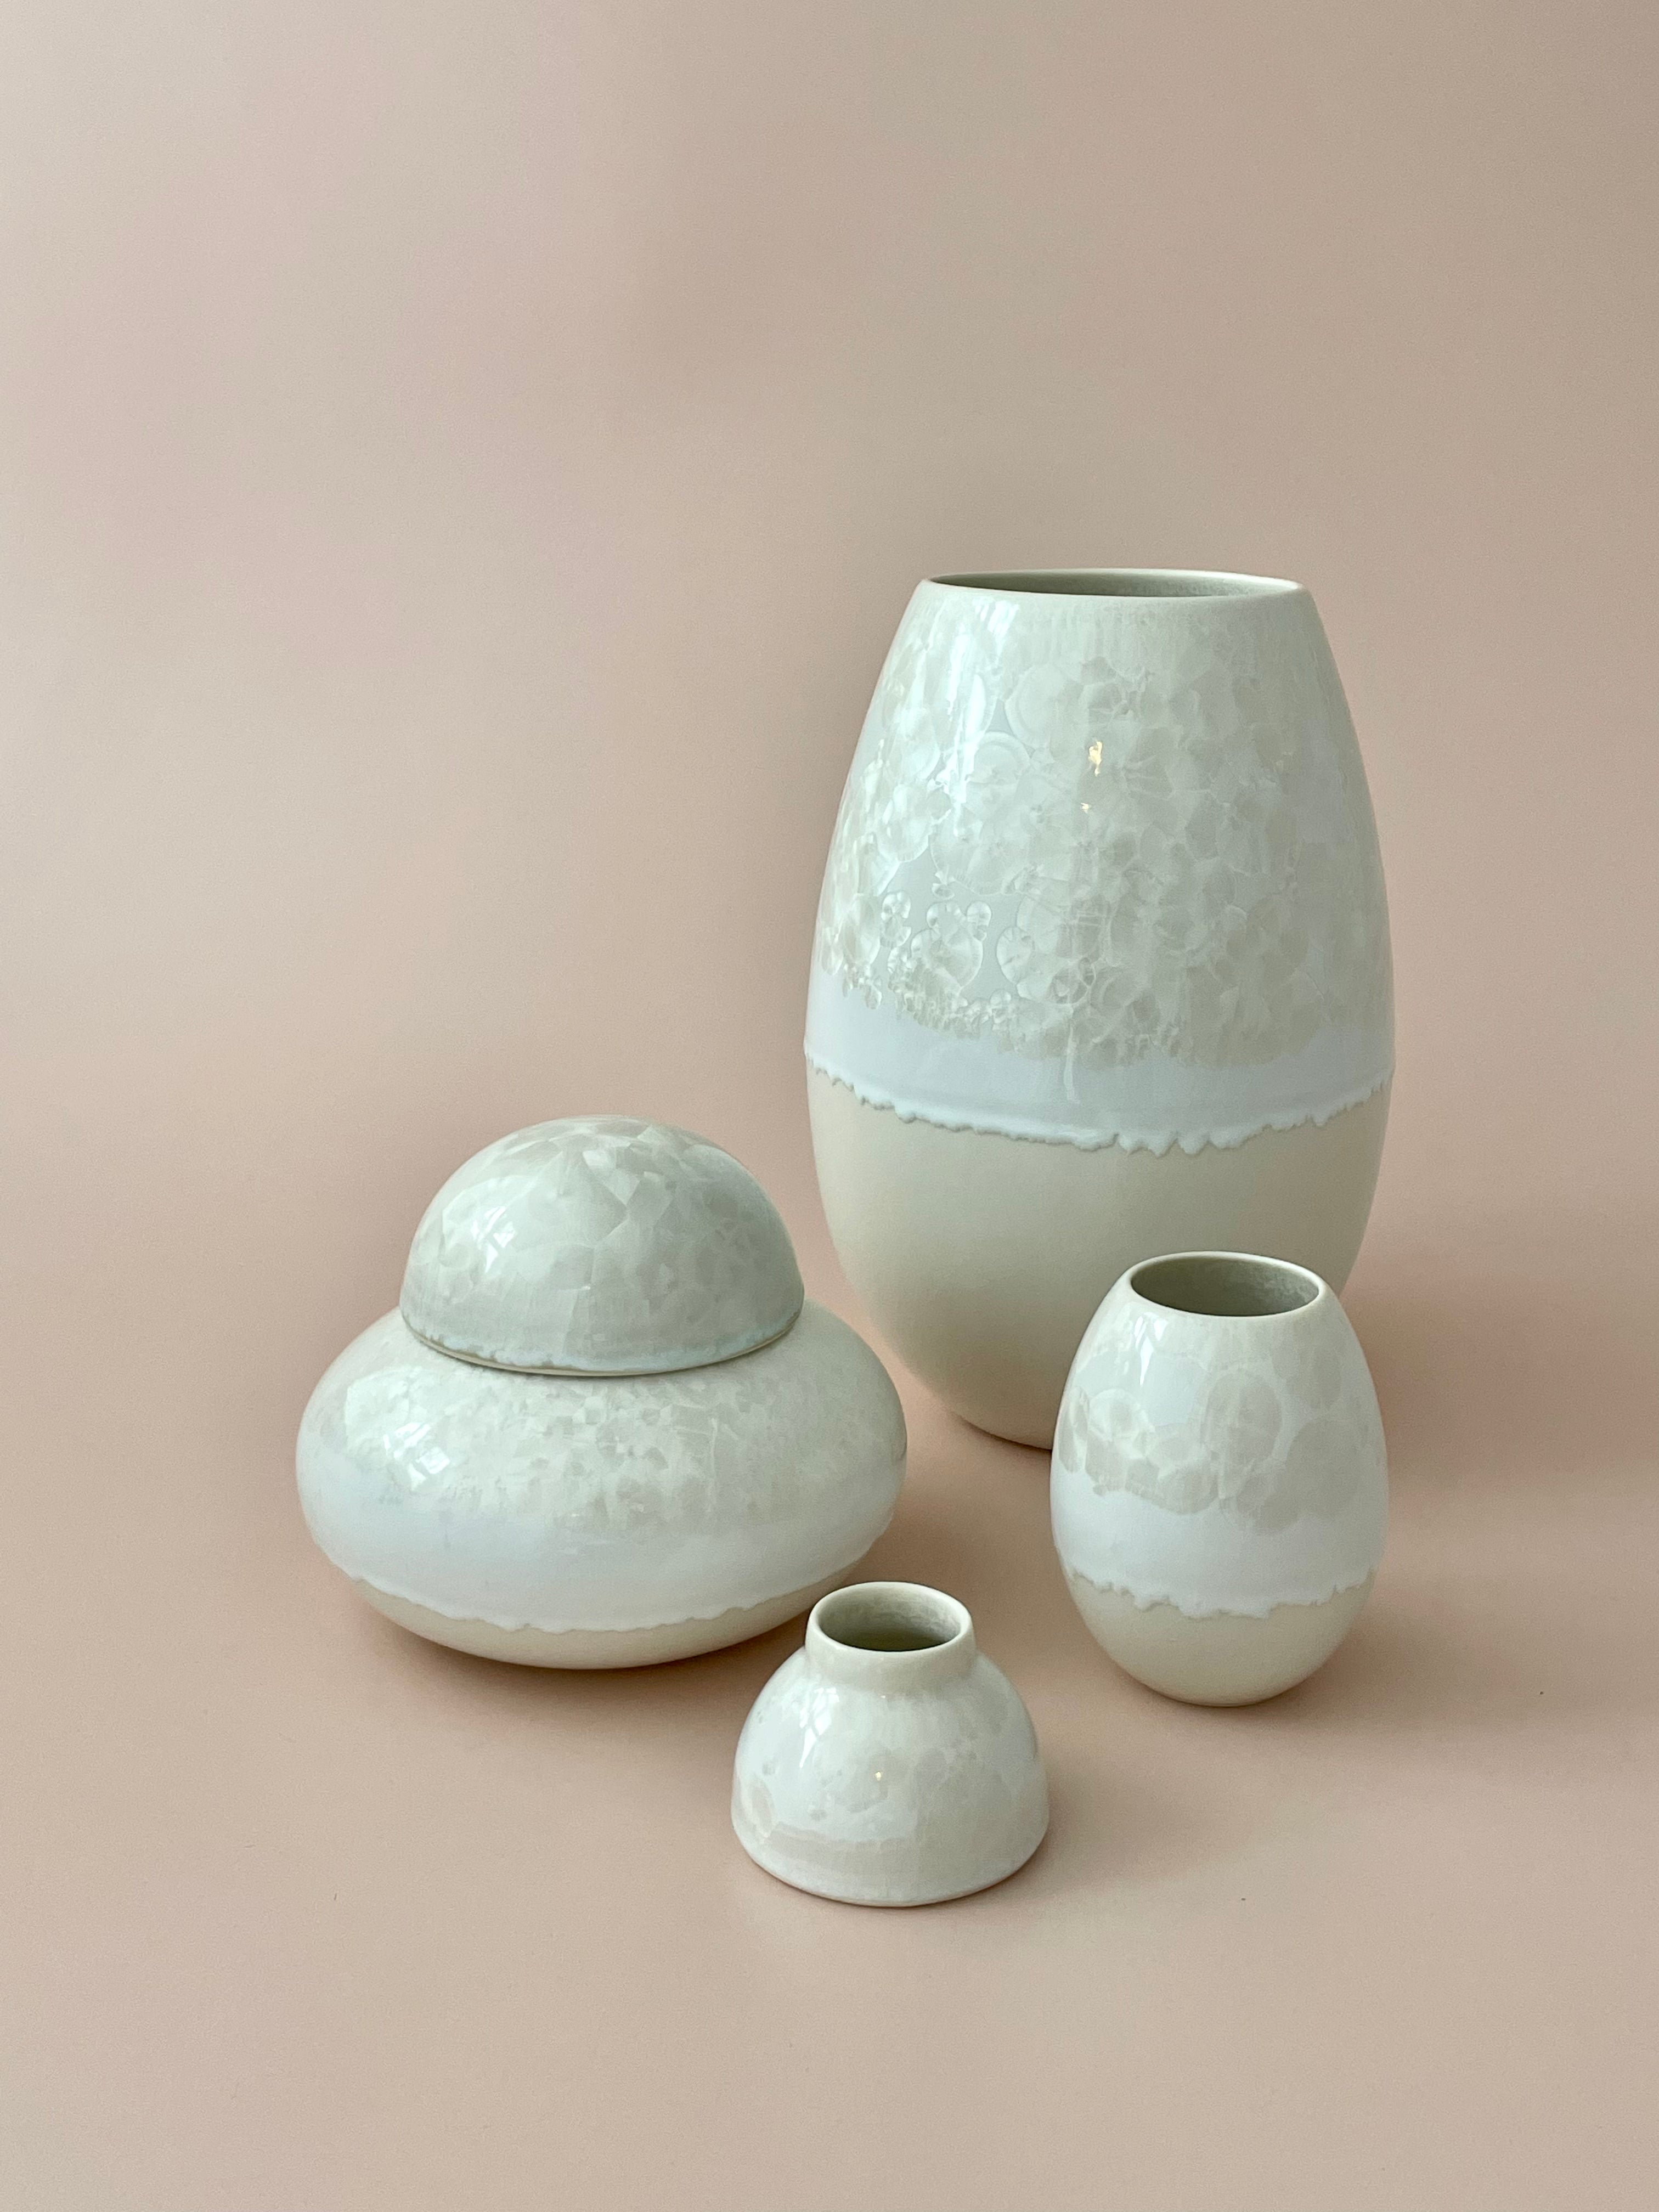 Crystal Vase - Small Beige